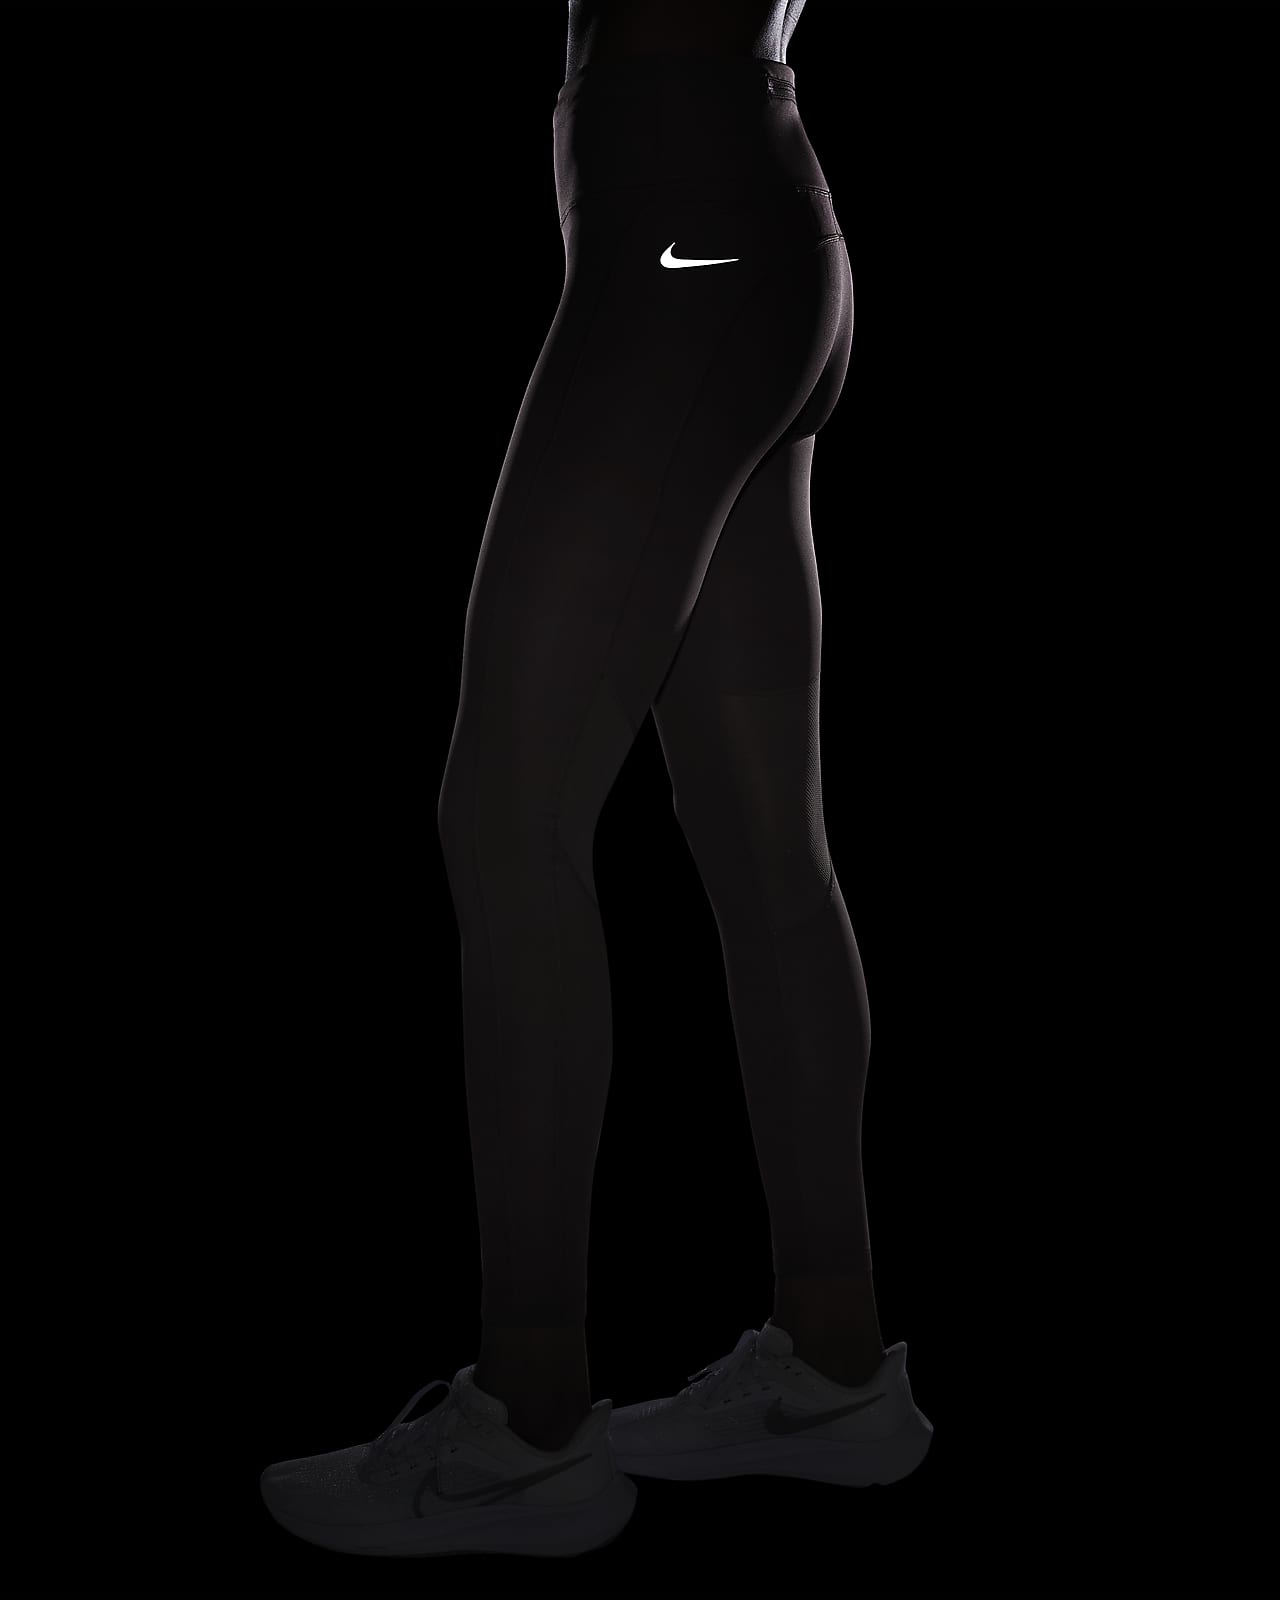 The best leggings for running by Nike. Nike MY